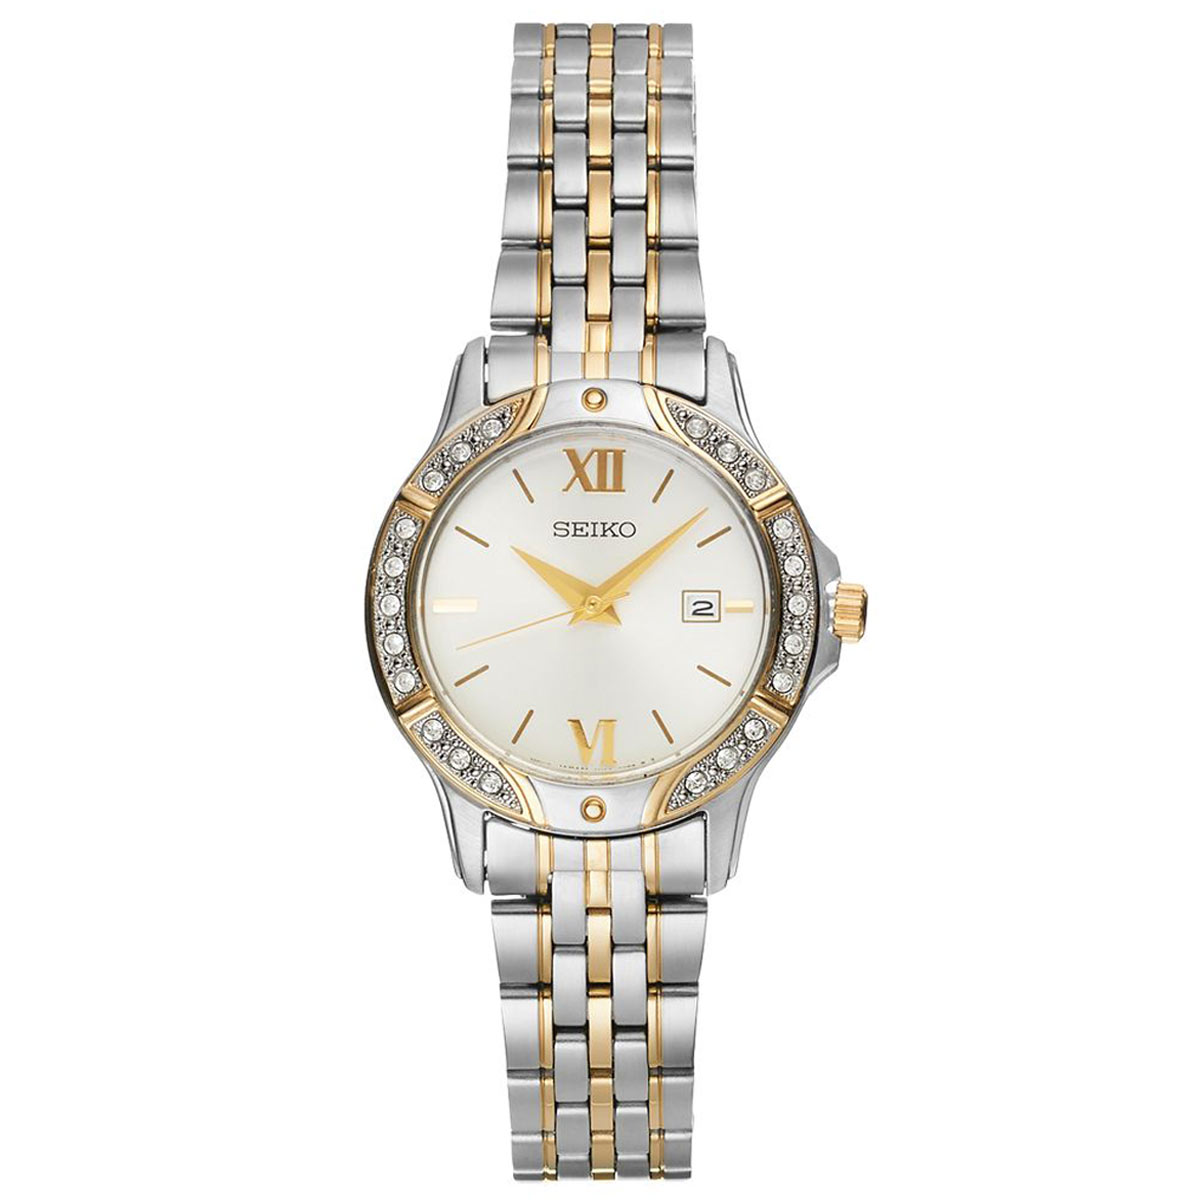 SEIKO 精工 Bracelet系列 SUR864 女款時裝腕錶   $69